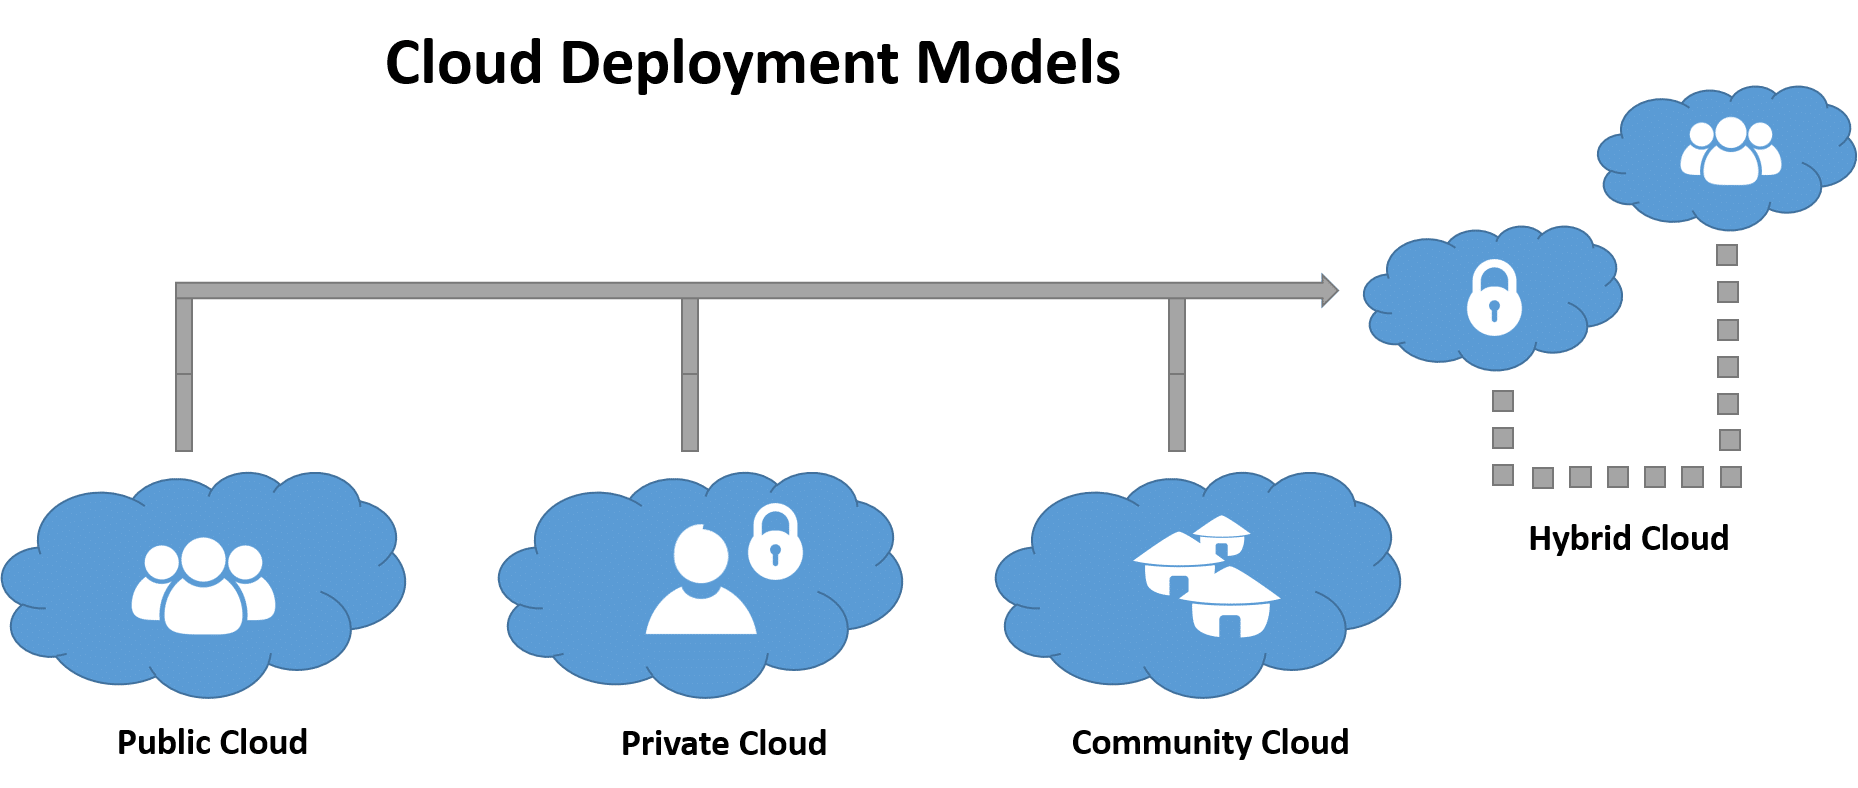 Different Cloud Deployment Models 